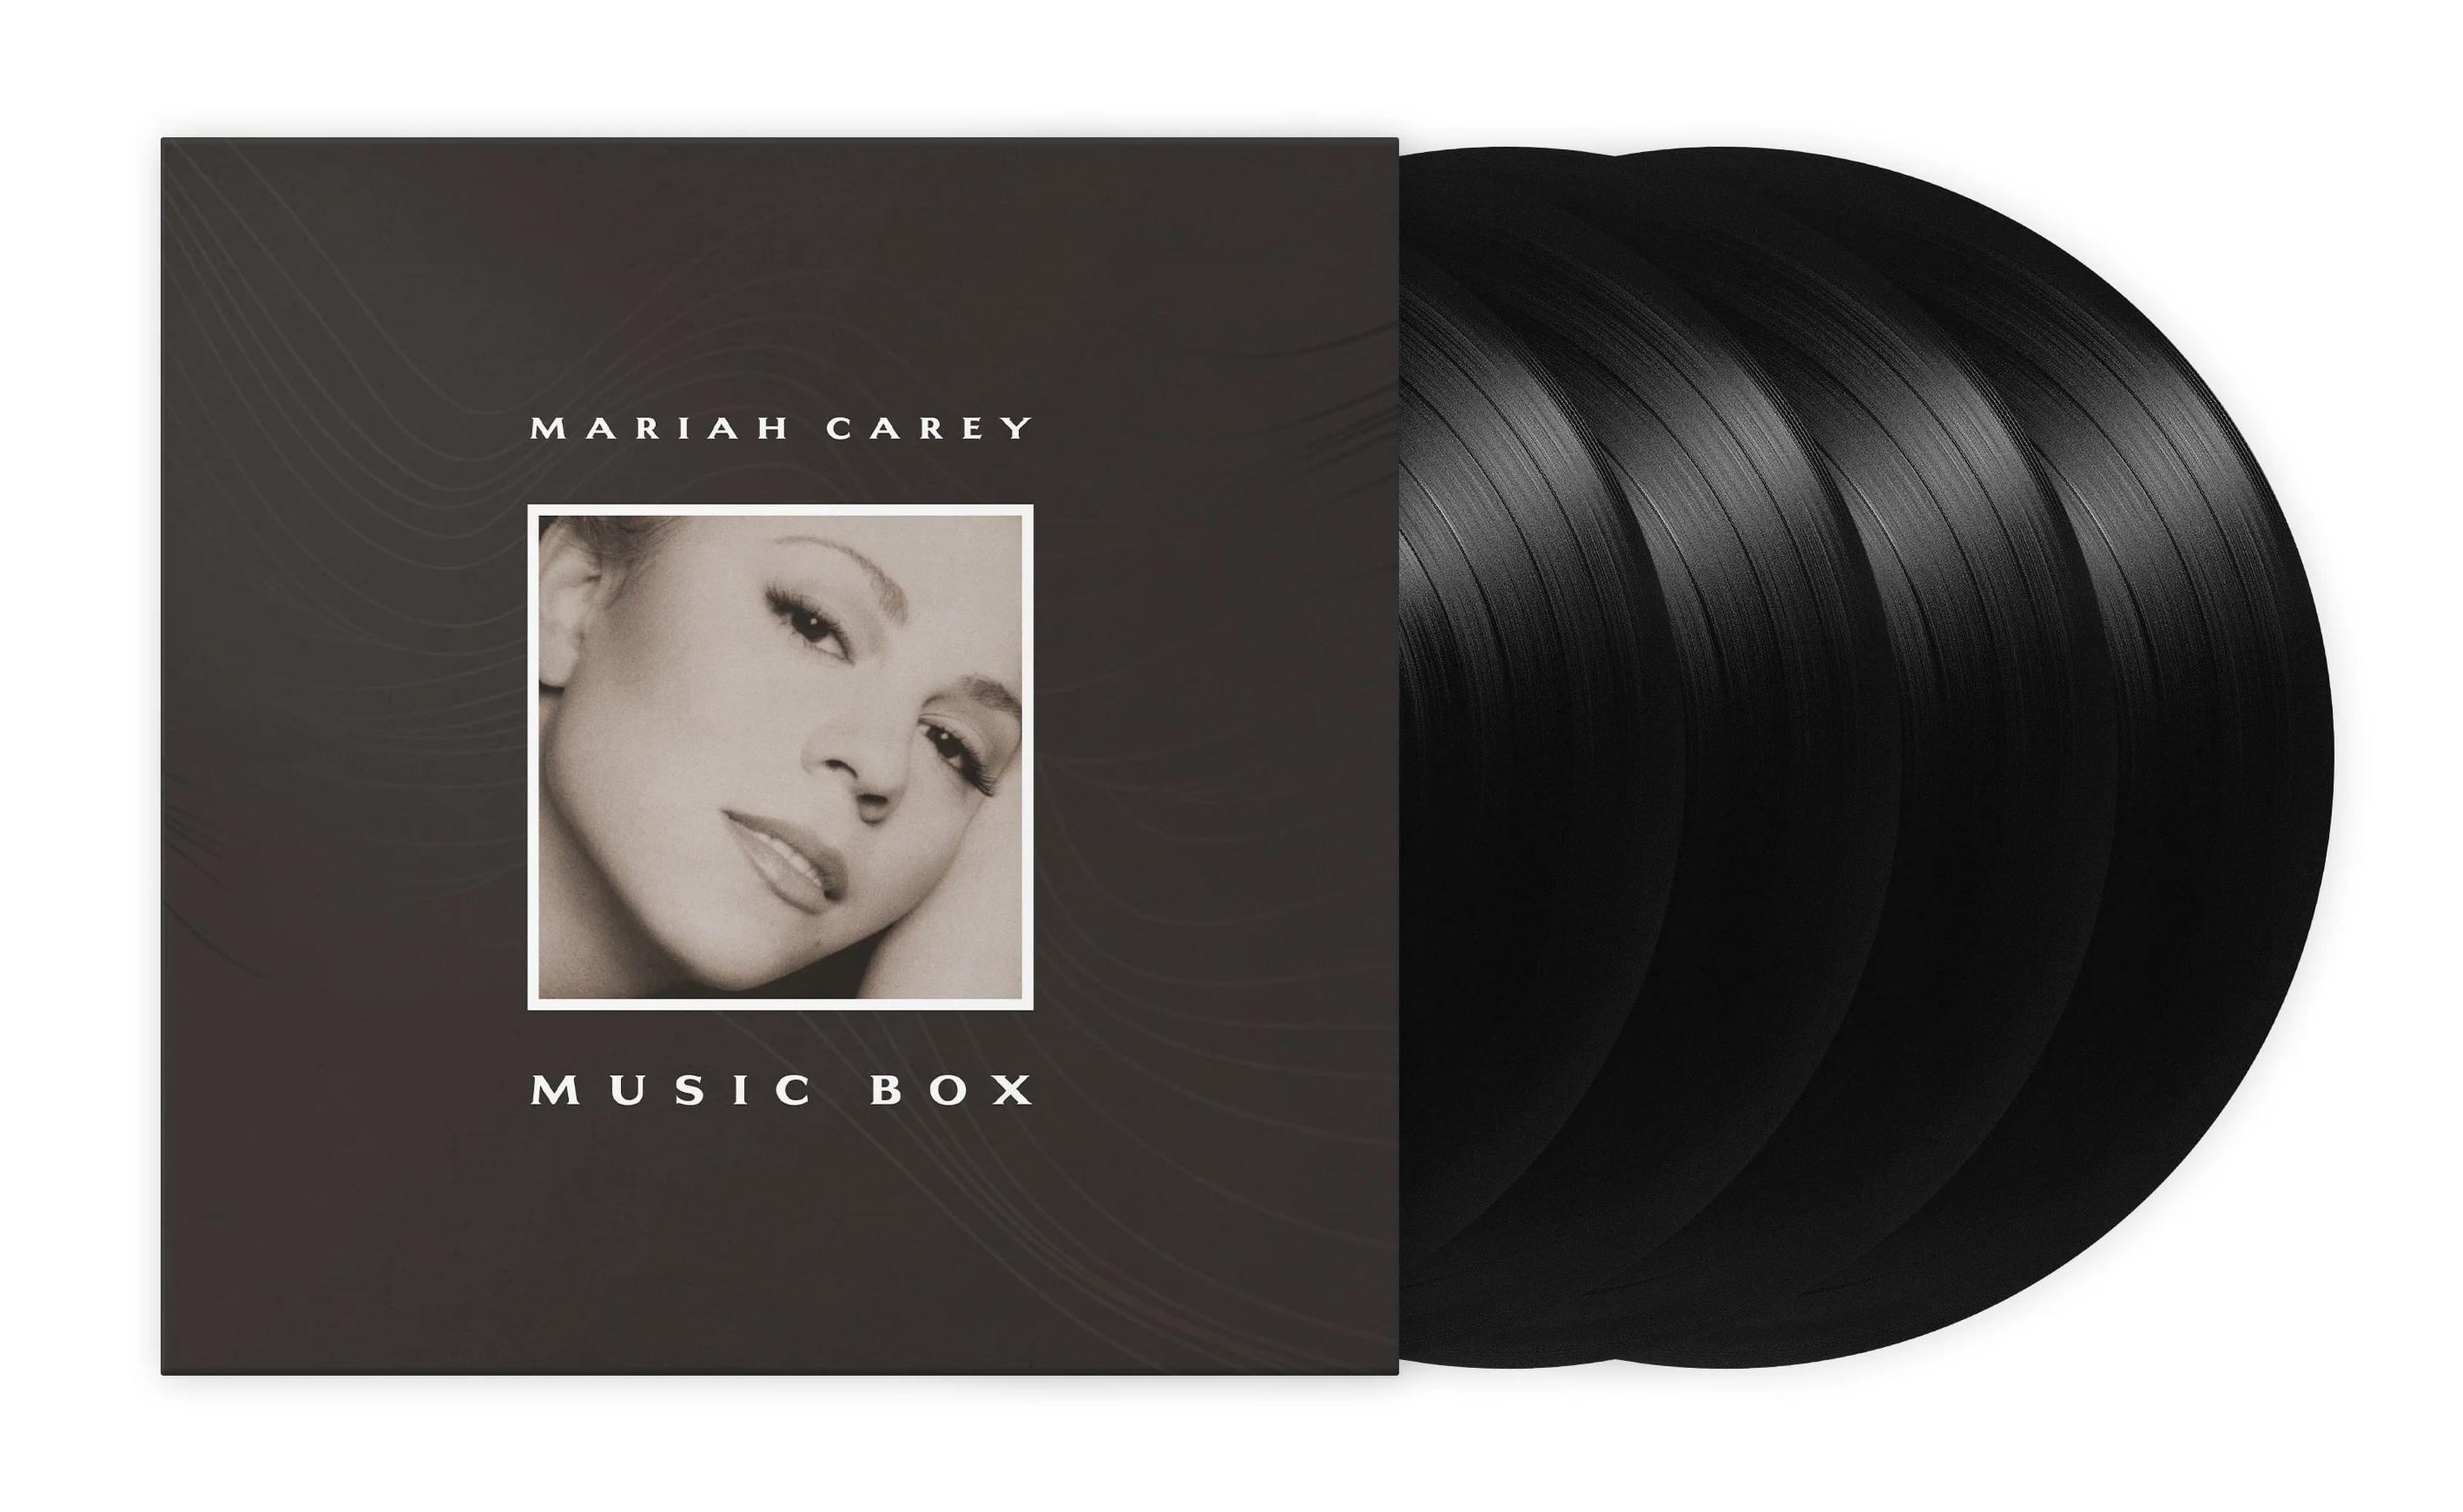 Mariah Carey - Music Box [30th Anniversary Edition] (19658804881)